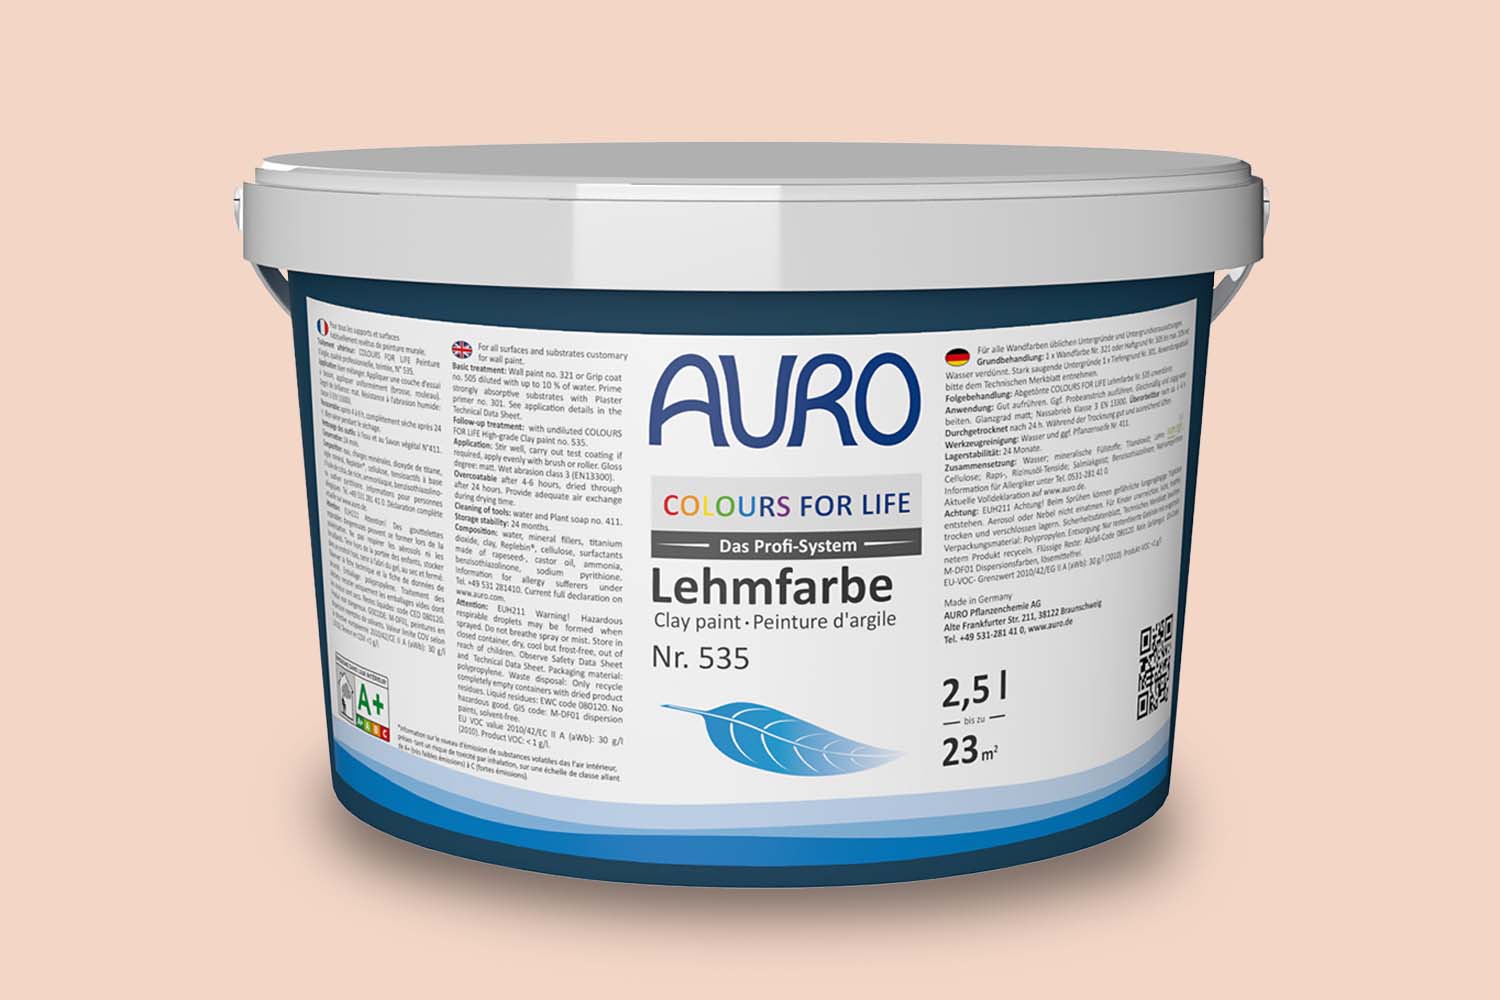 Auro Profi-Lehmfarbe Nr. 535 coastal cottage Colours For Life